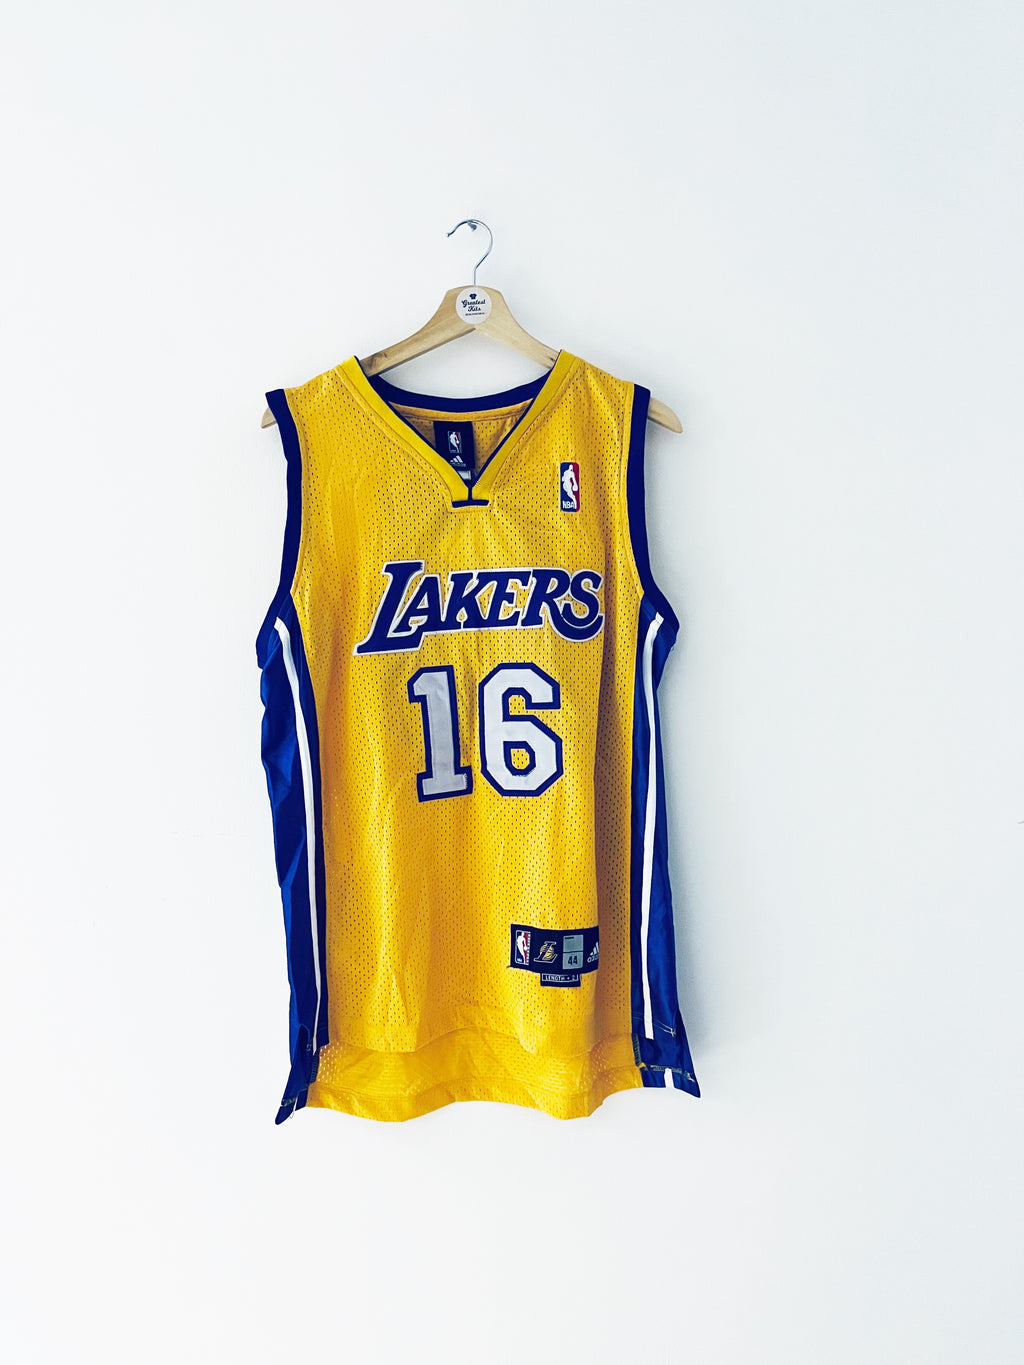 2010-14 Los Angeles Lakers Adidas camiseta local Gasol # 16 (S) 9/10